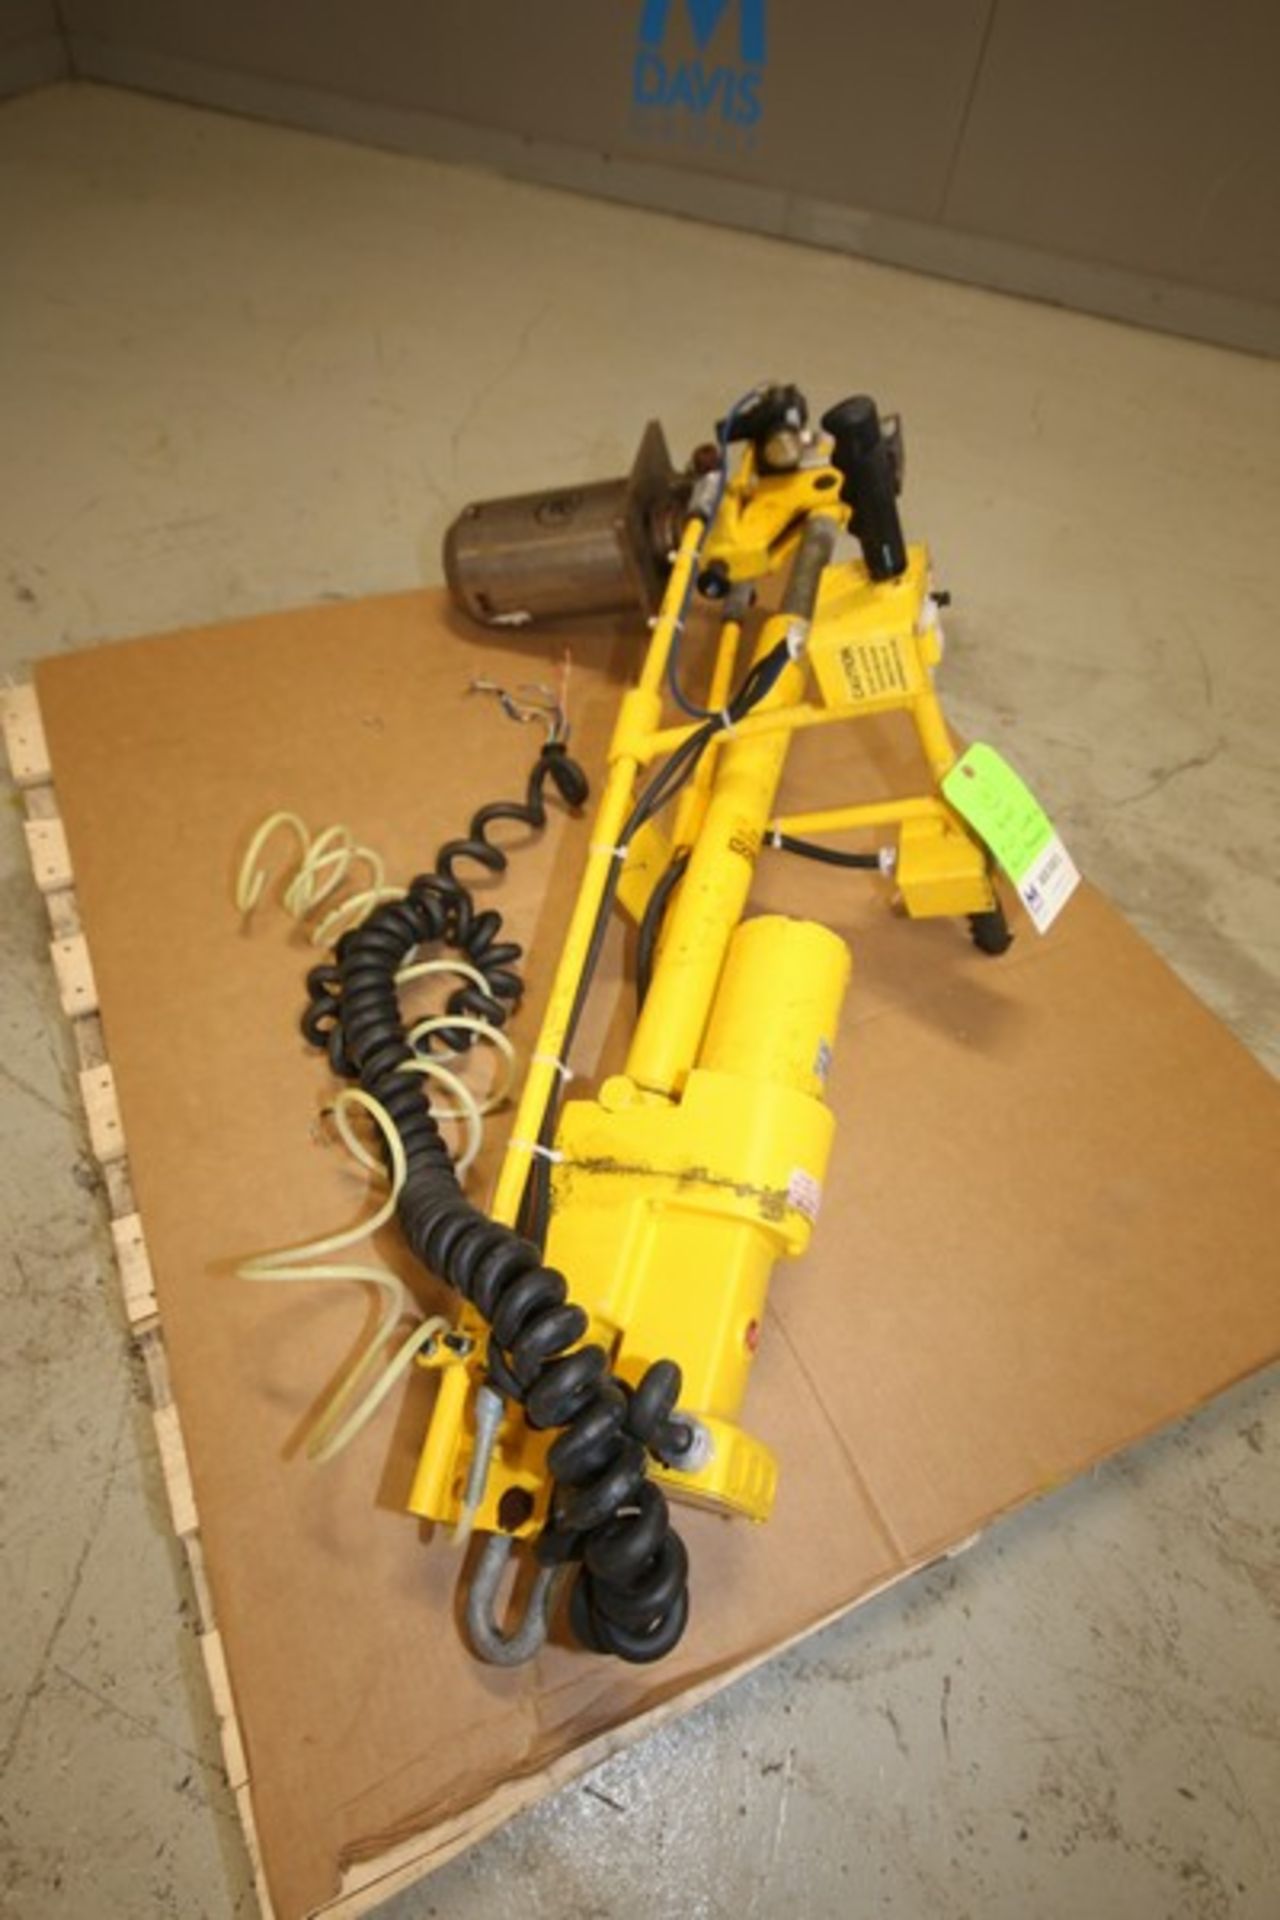 Tilt - Lock Inc. Roll Handler, Model YY 94/76-2A, 1/2 hp, 115V (INV#88381)(Located @ the MDG Auction